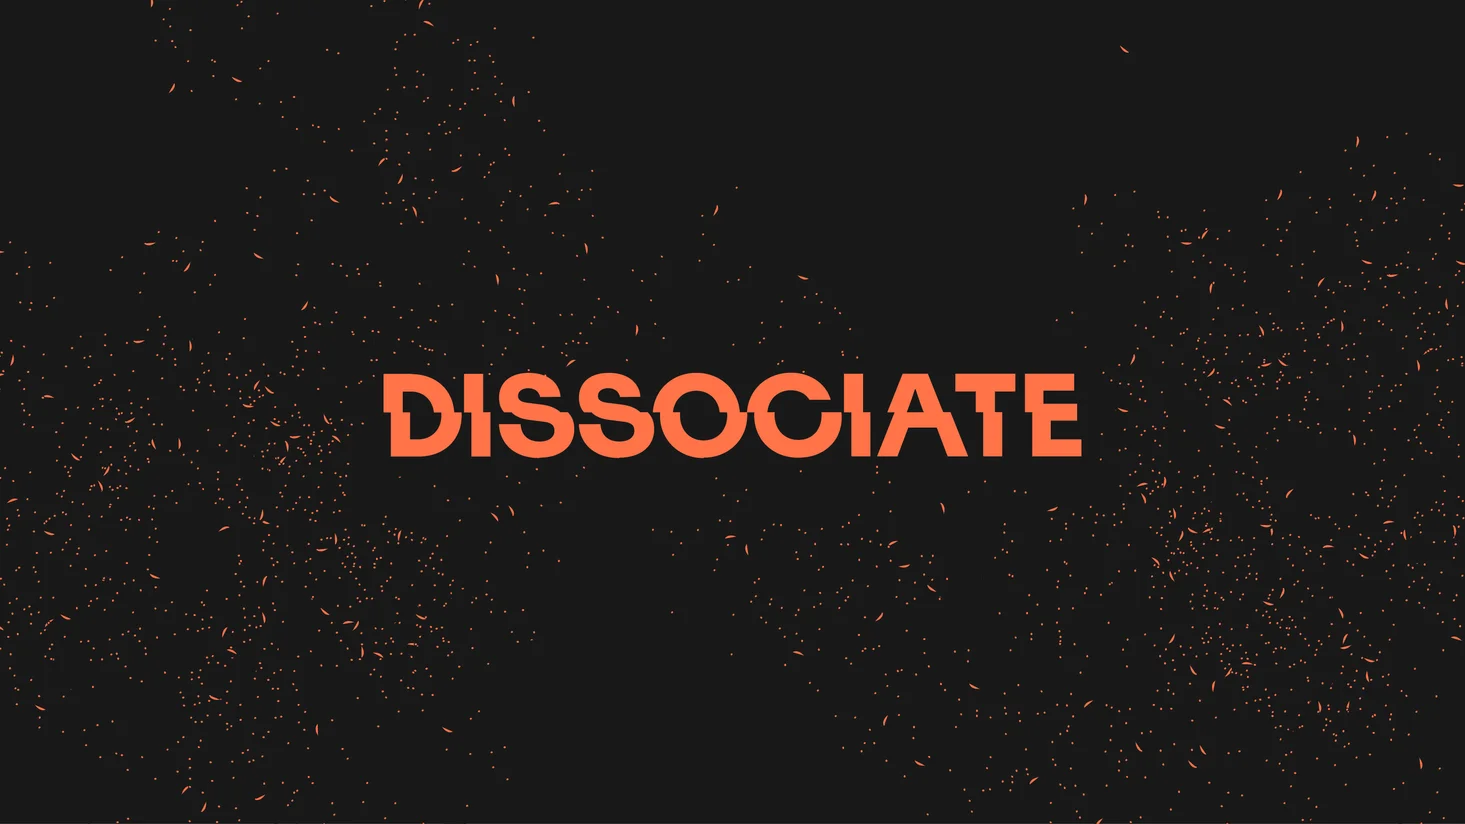 Dissociate's logotype